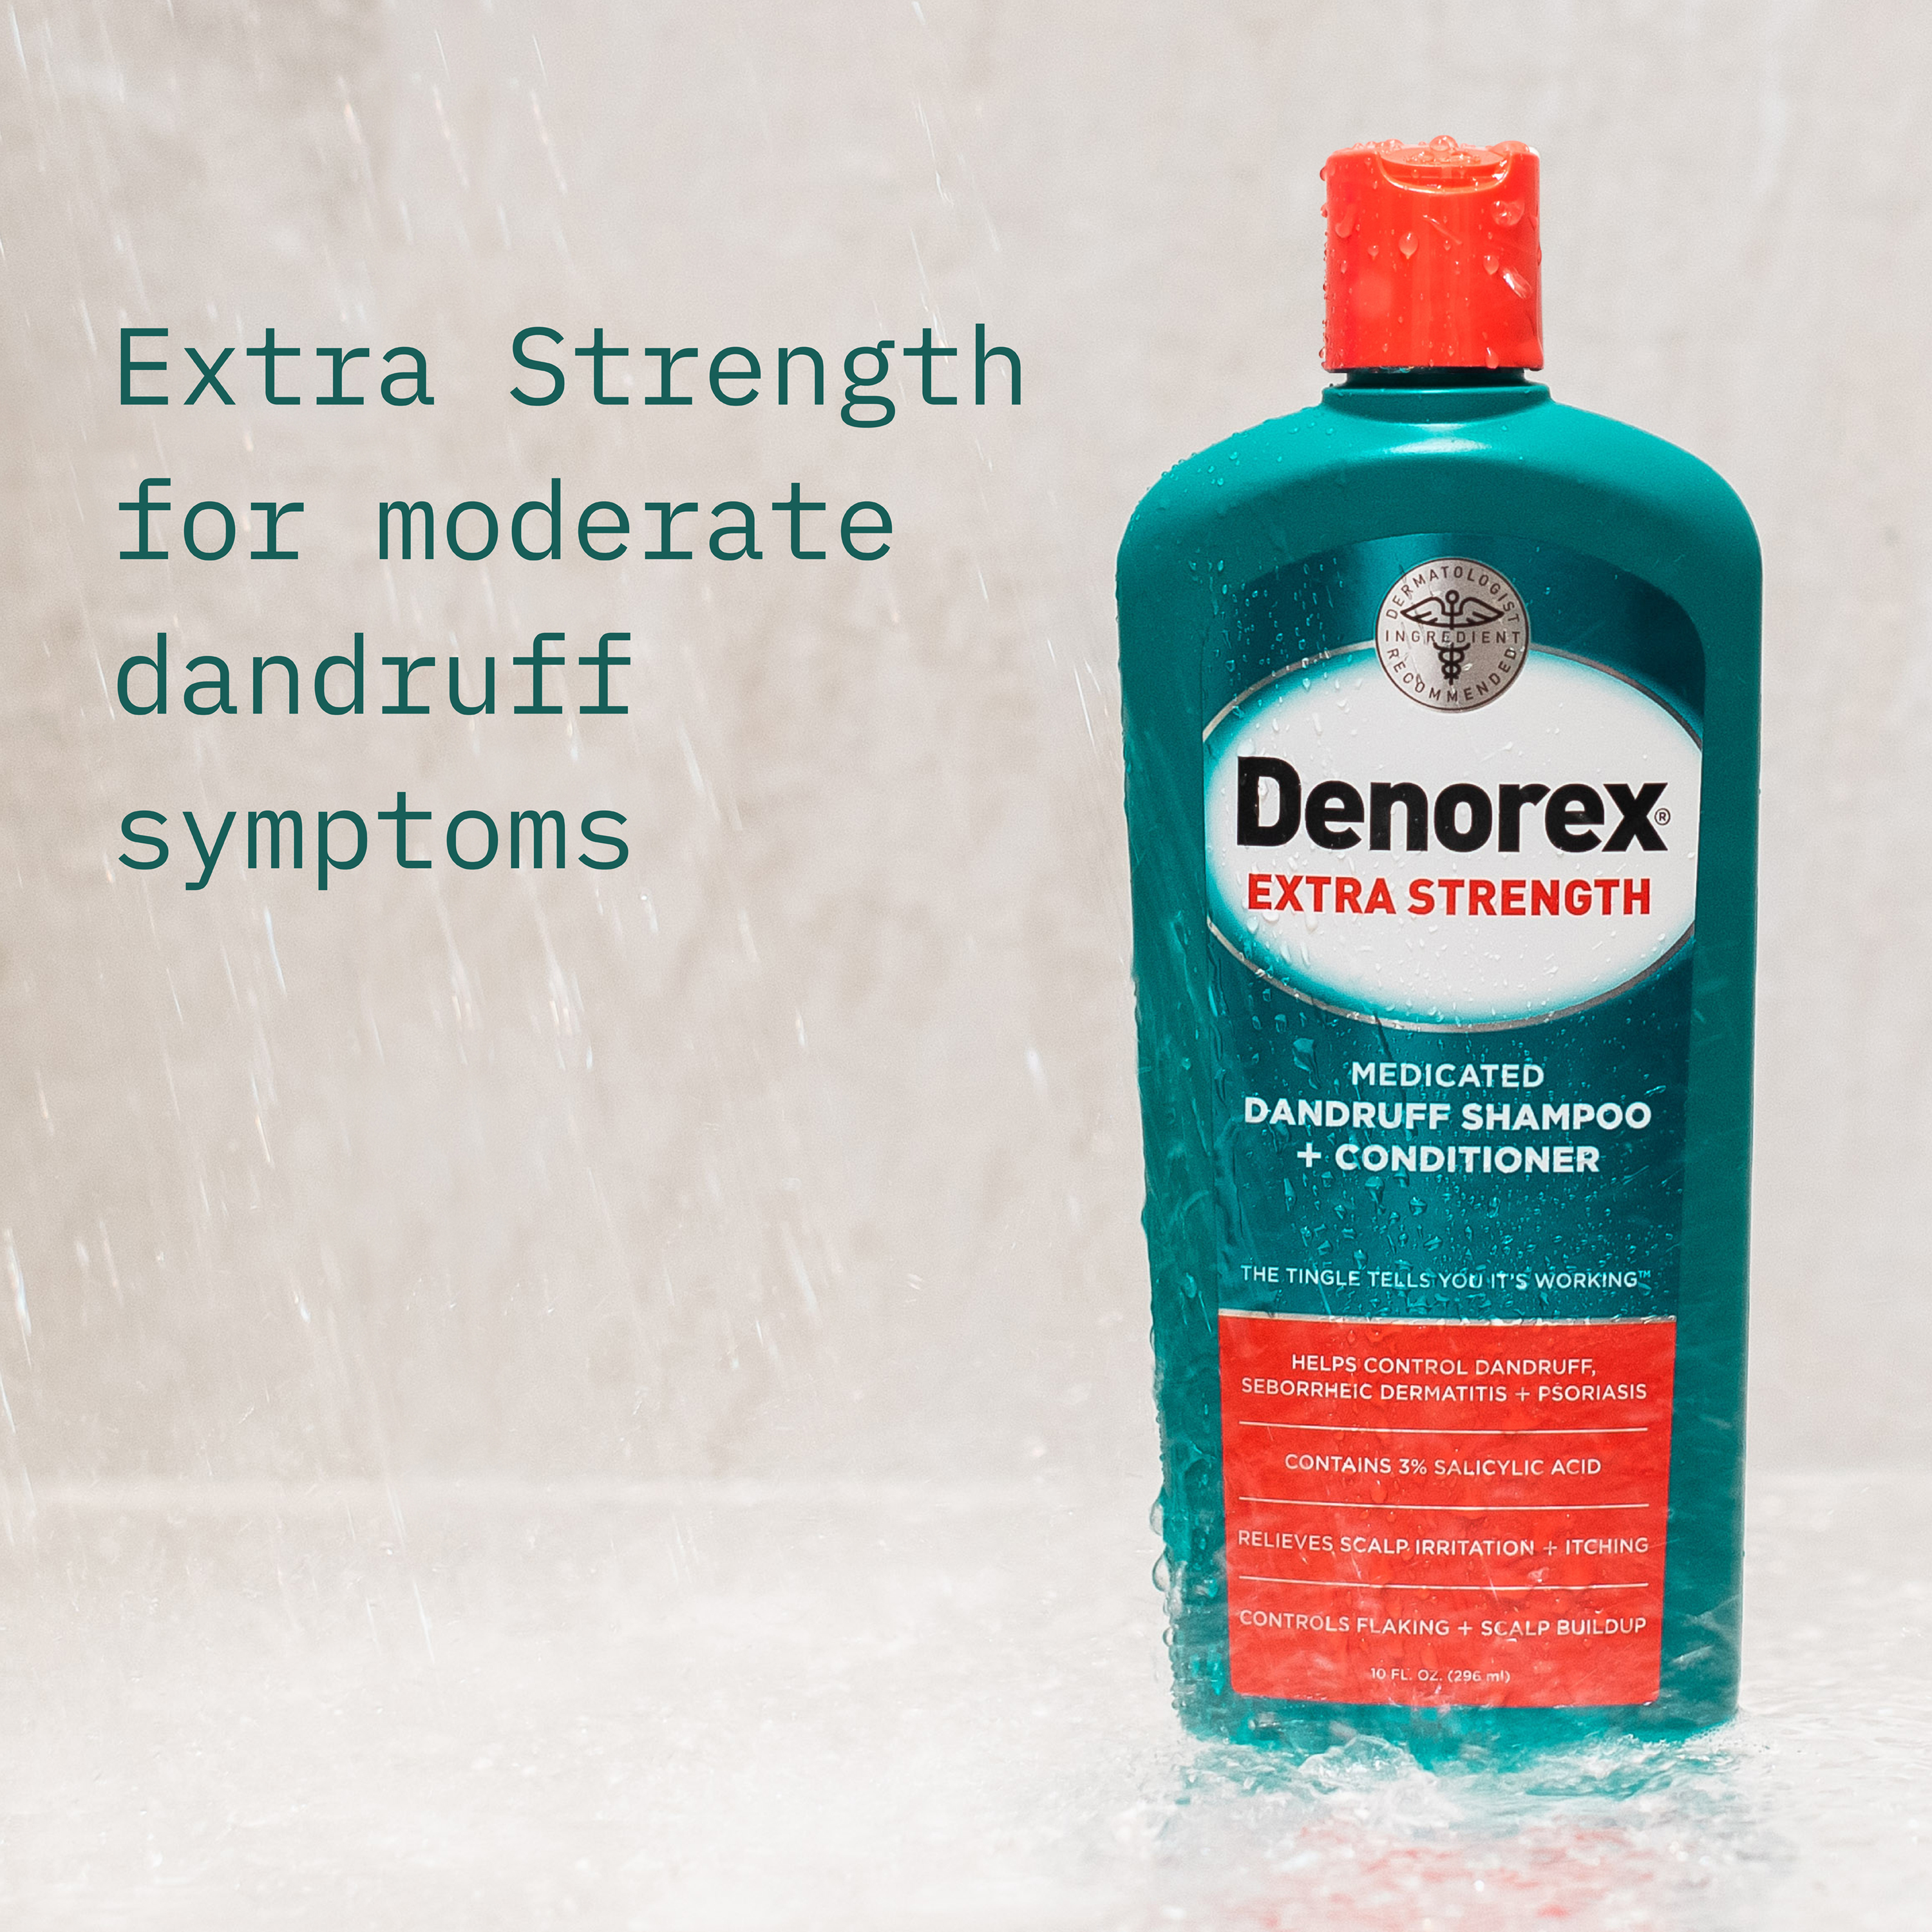 Denorex Extra Strength Medicated Dandruff Shampoo and Conditioner, 10 fl oz - image 5 of 9